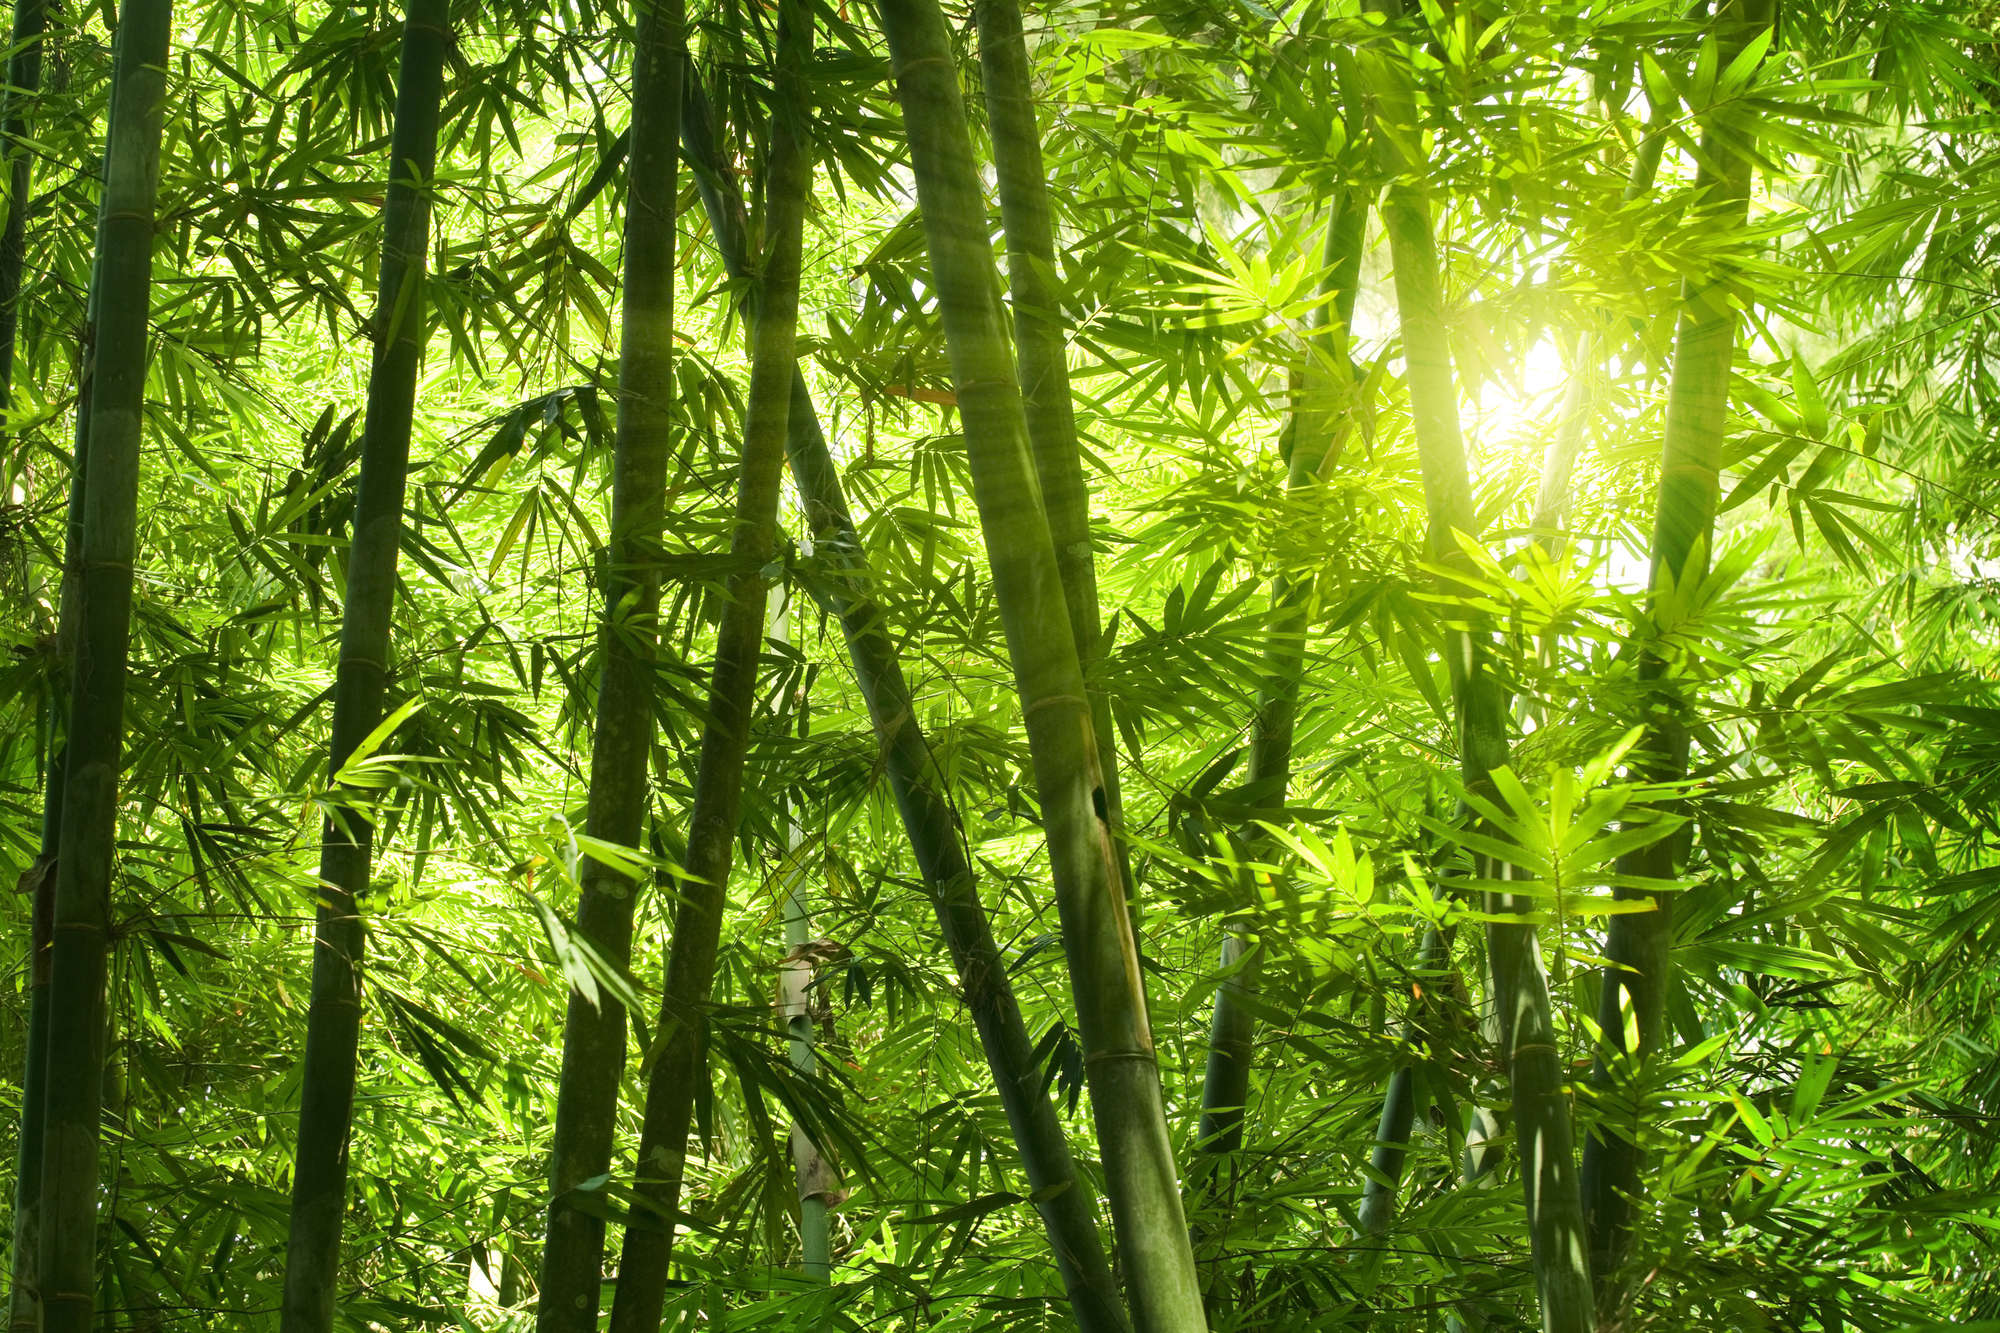             Natuur Behang Bamboe Bosmotief op Premium Glad Vlies
        